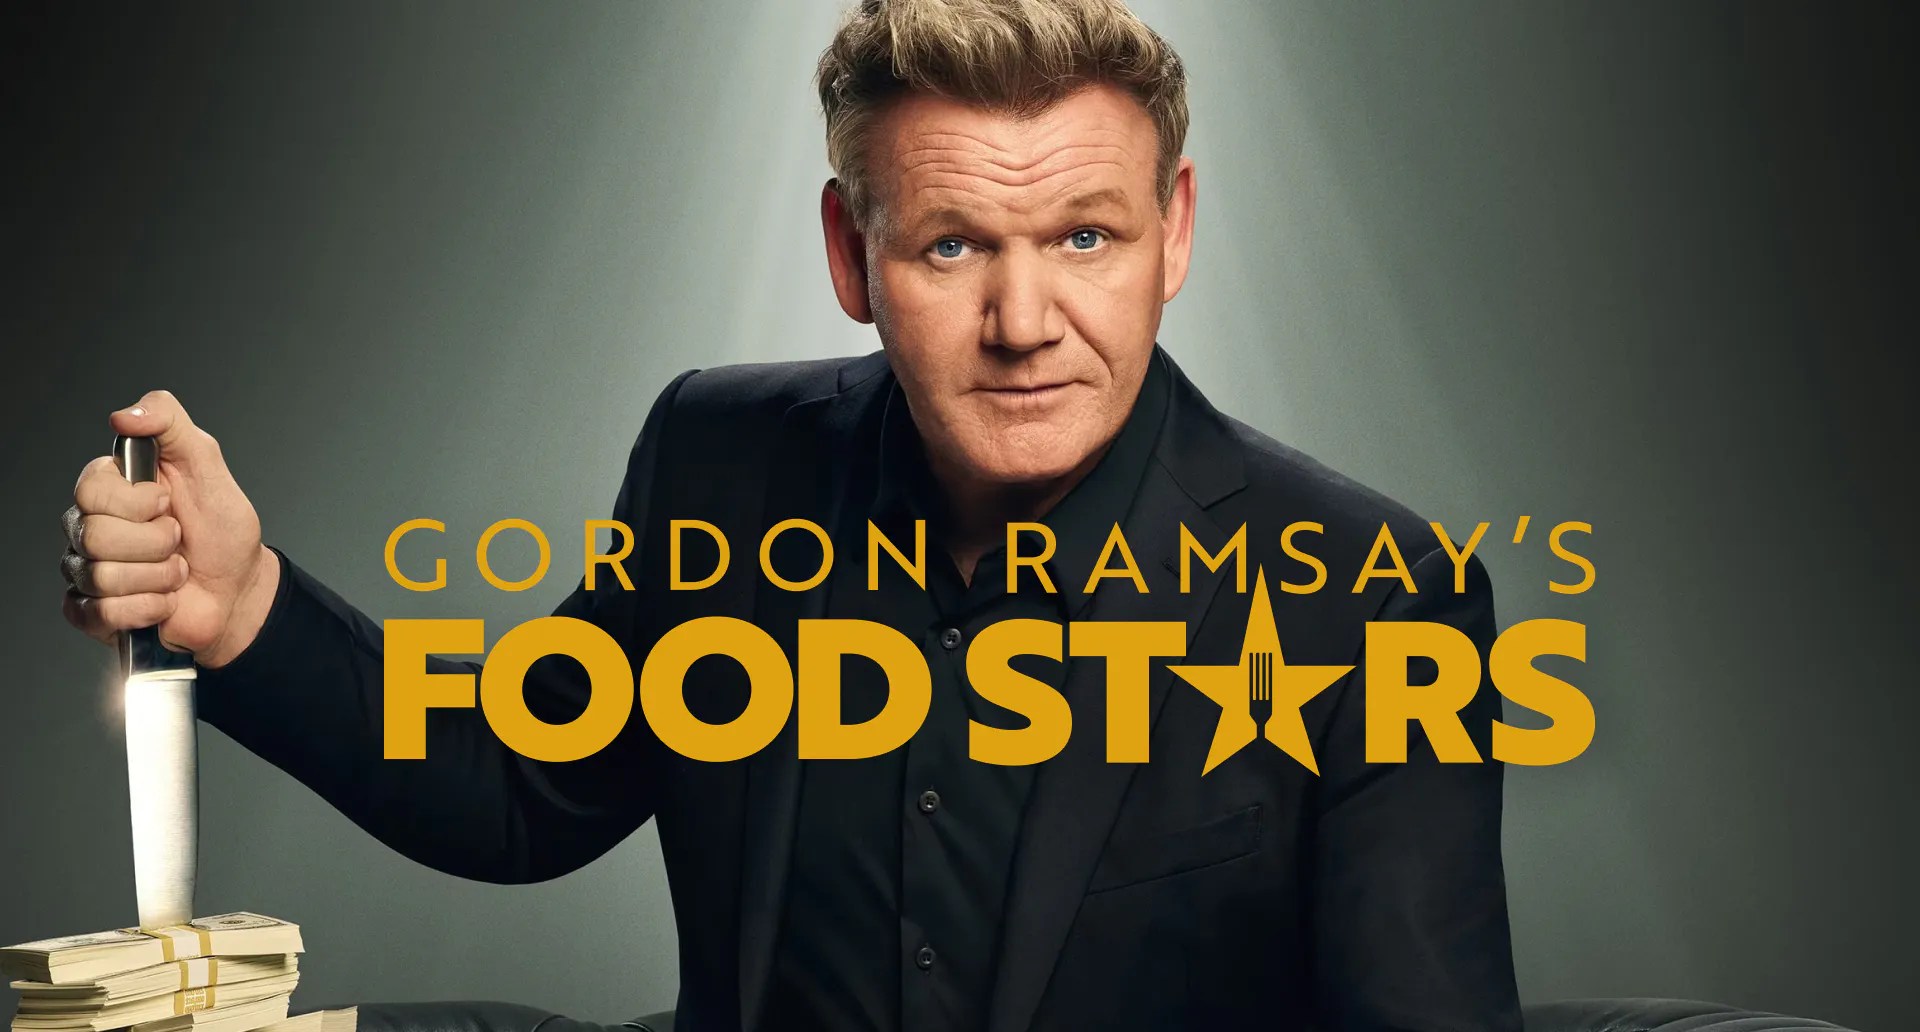 Gordon Ramsey’s Food Stars